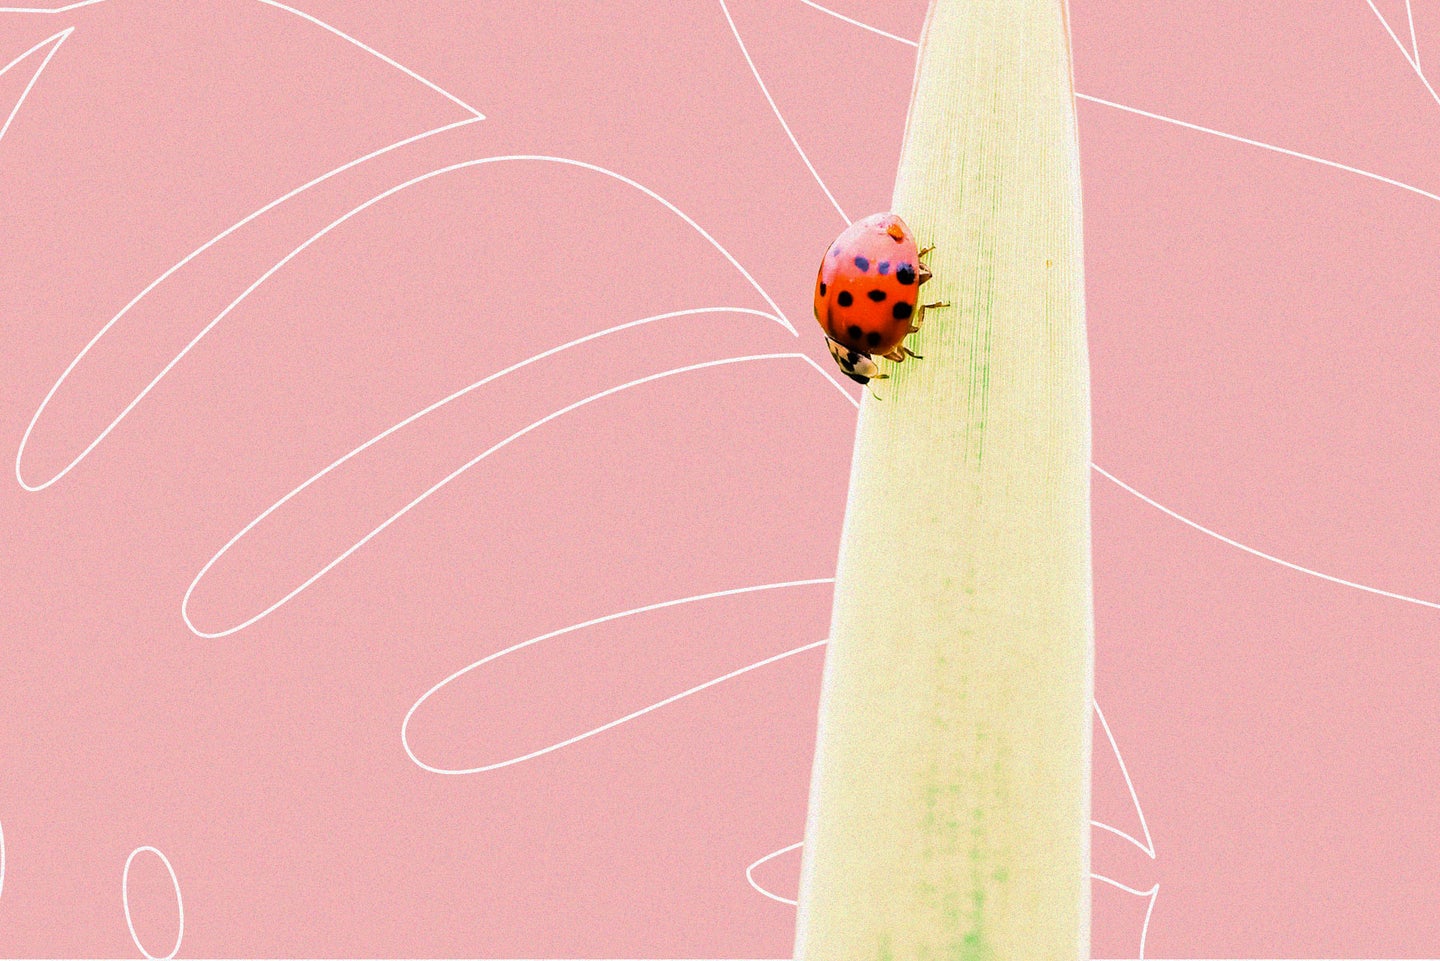 A ladybug on a leaf.